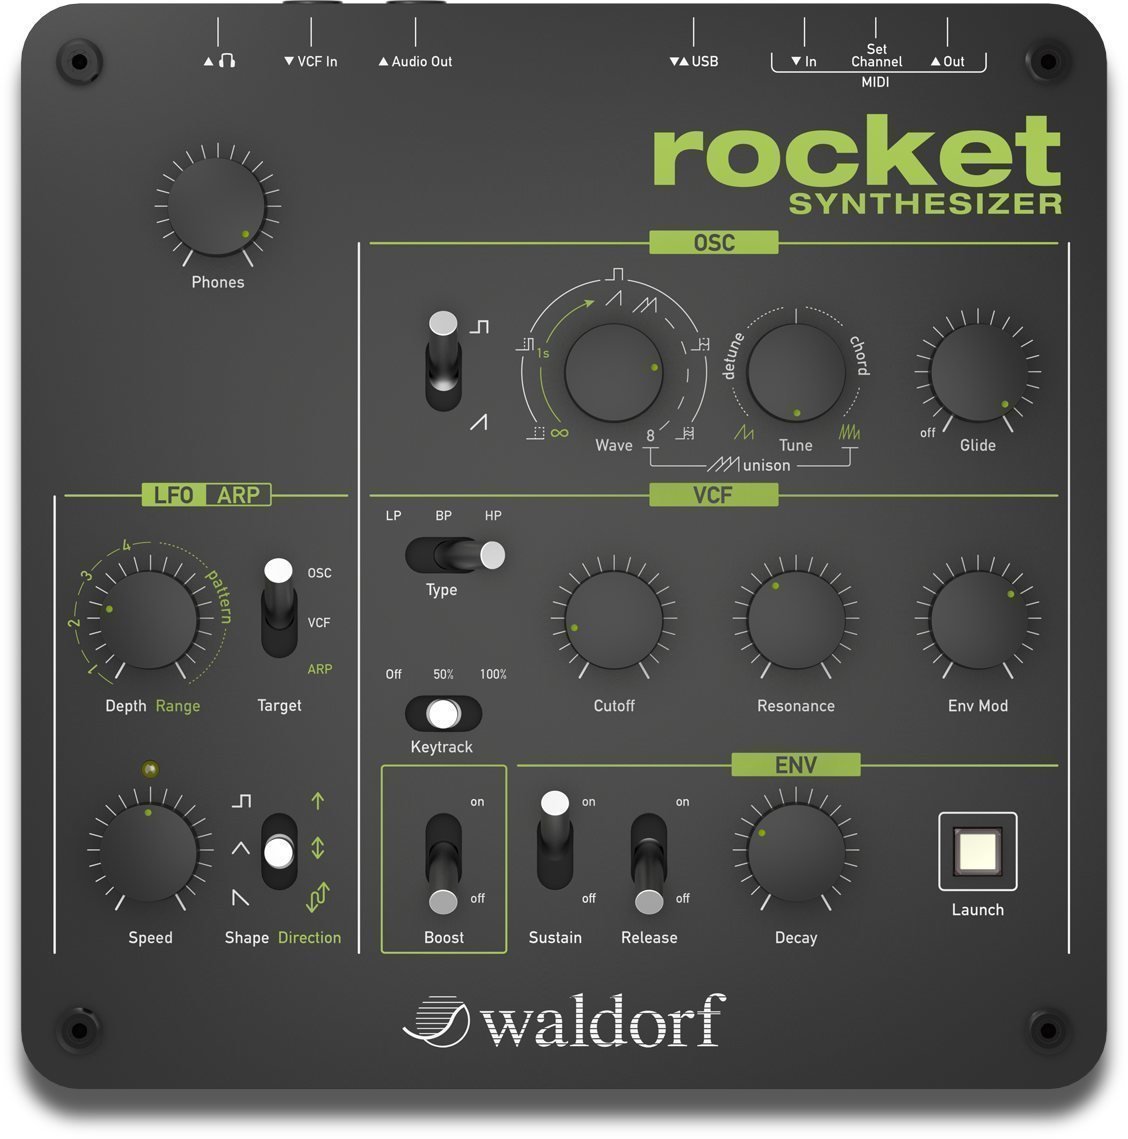 Sintetizador Waldorf Rocket Synthesizer